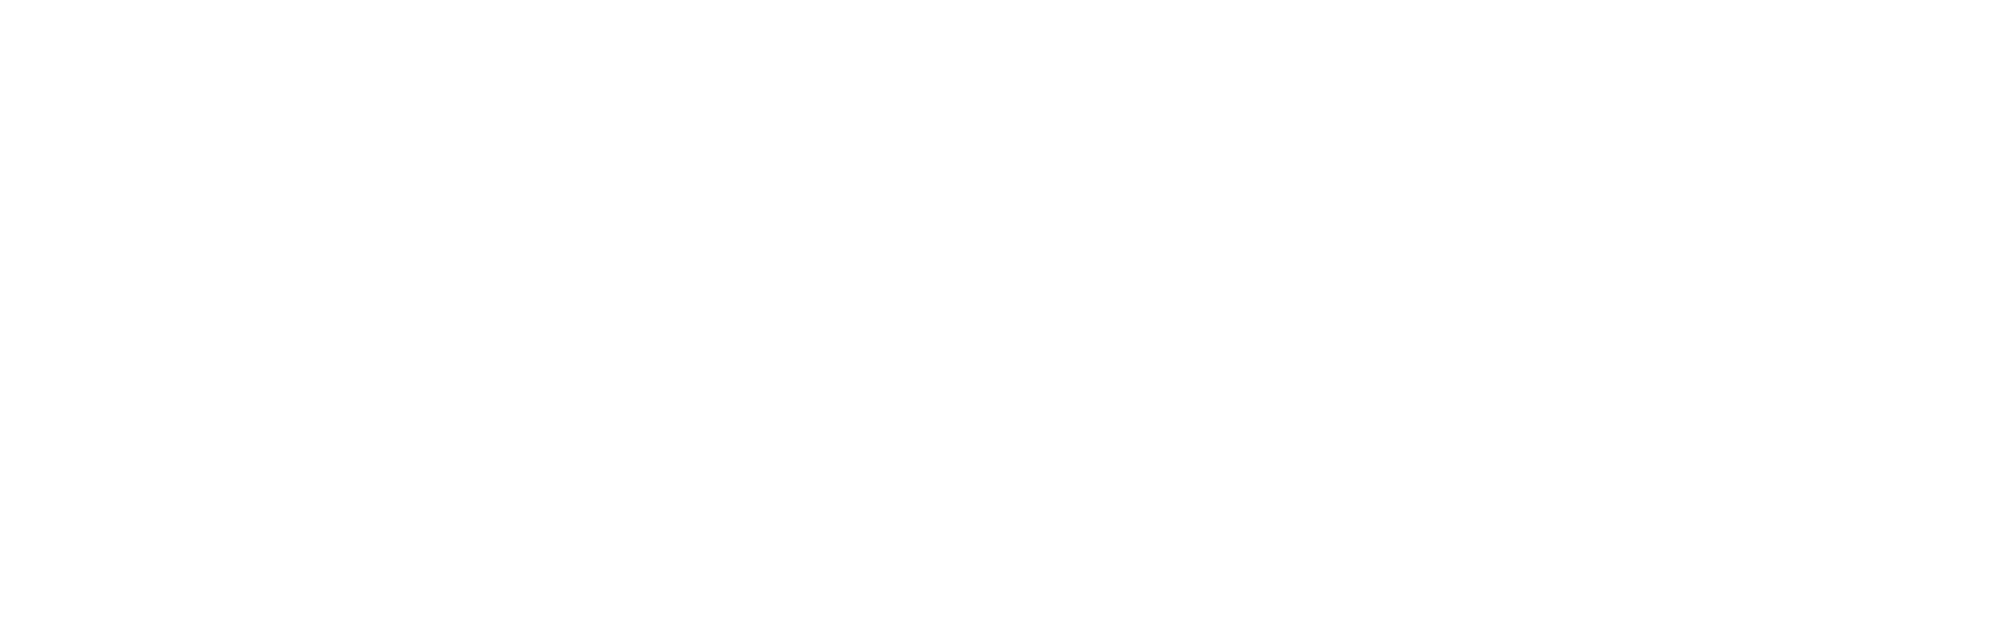 Kurumsal - Leather harmonica - Premium handmade leather goods